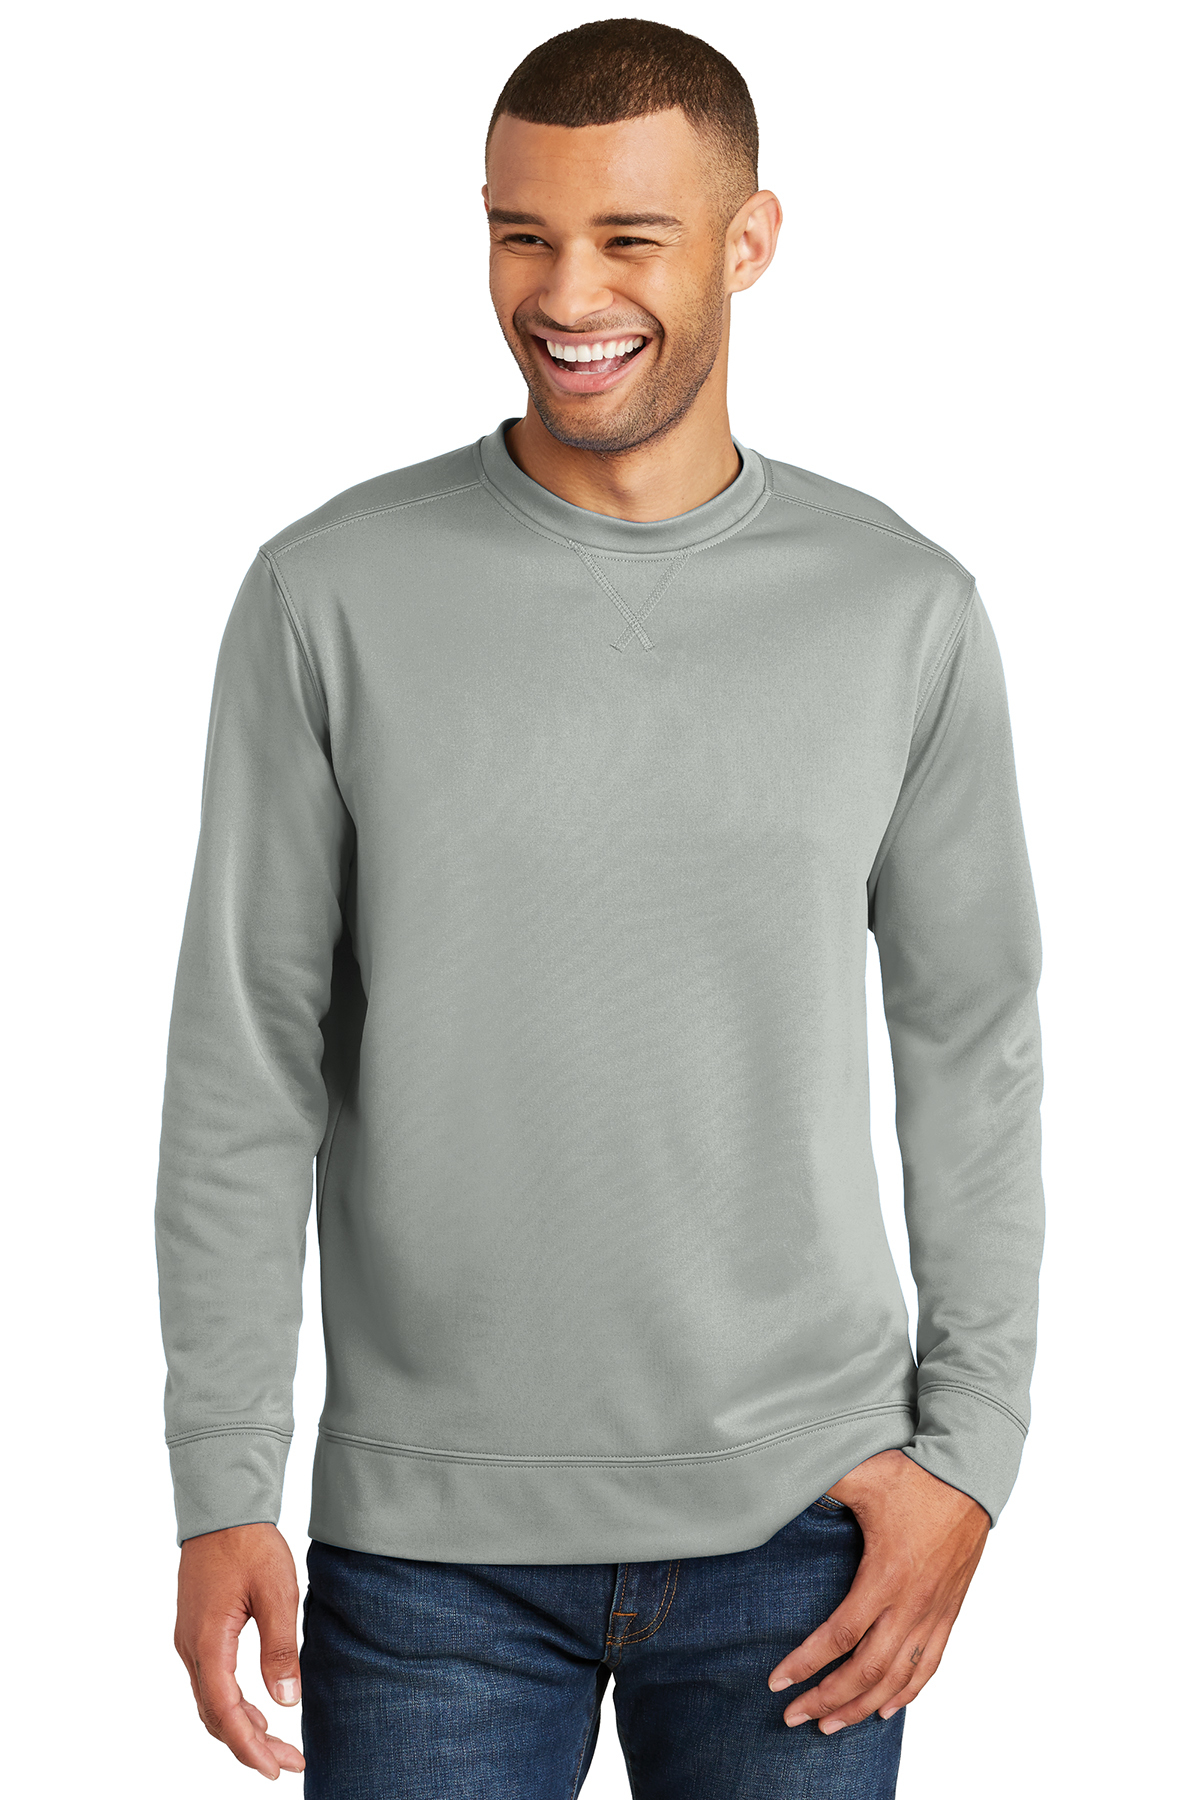 Port & Company PC590 - Performance Fleece Crewneck Sweatshirt $18.27 ...